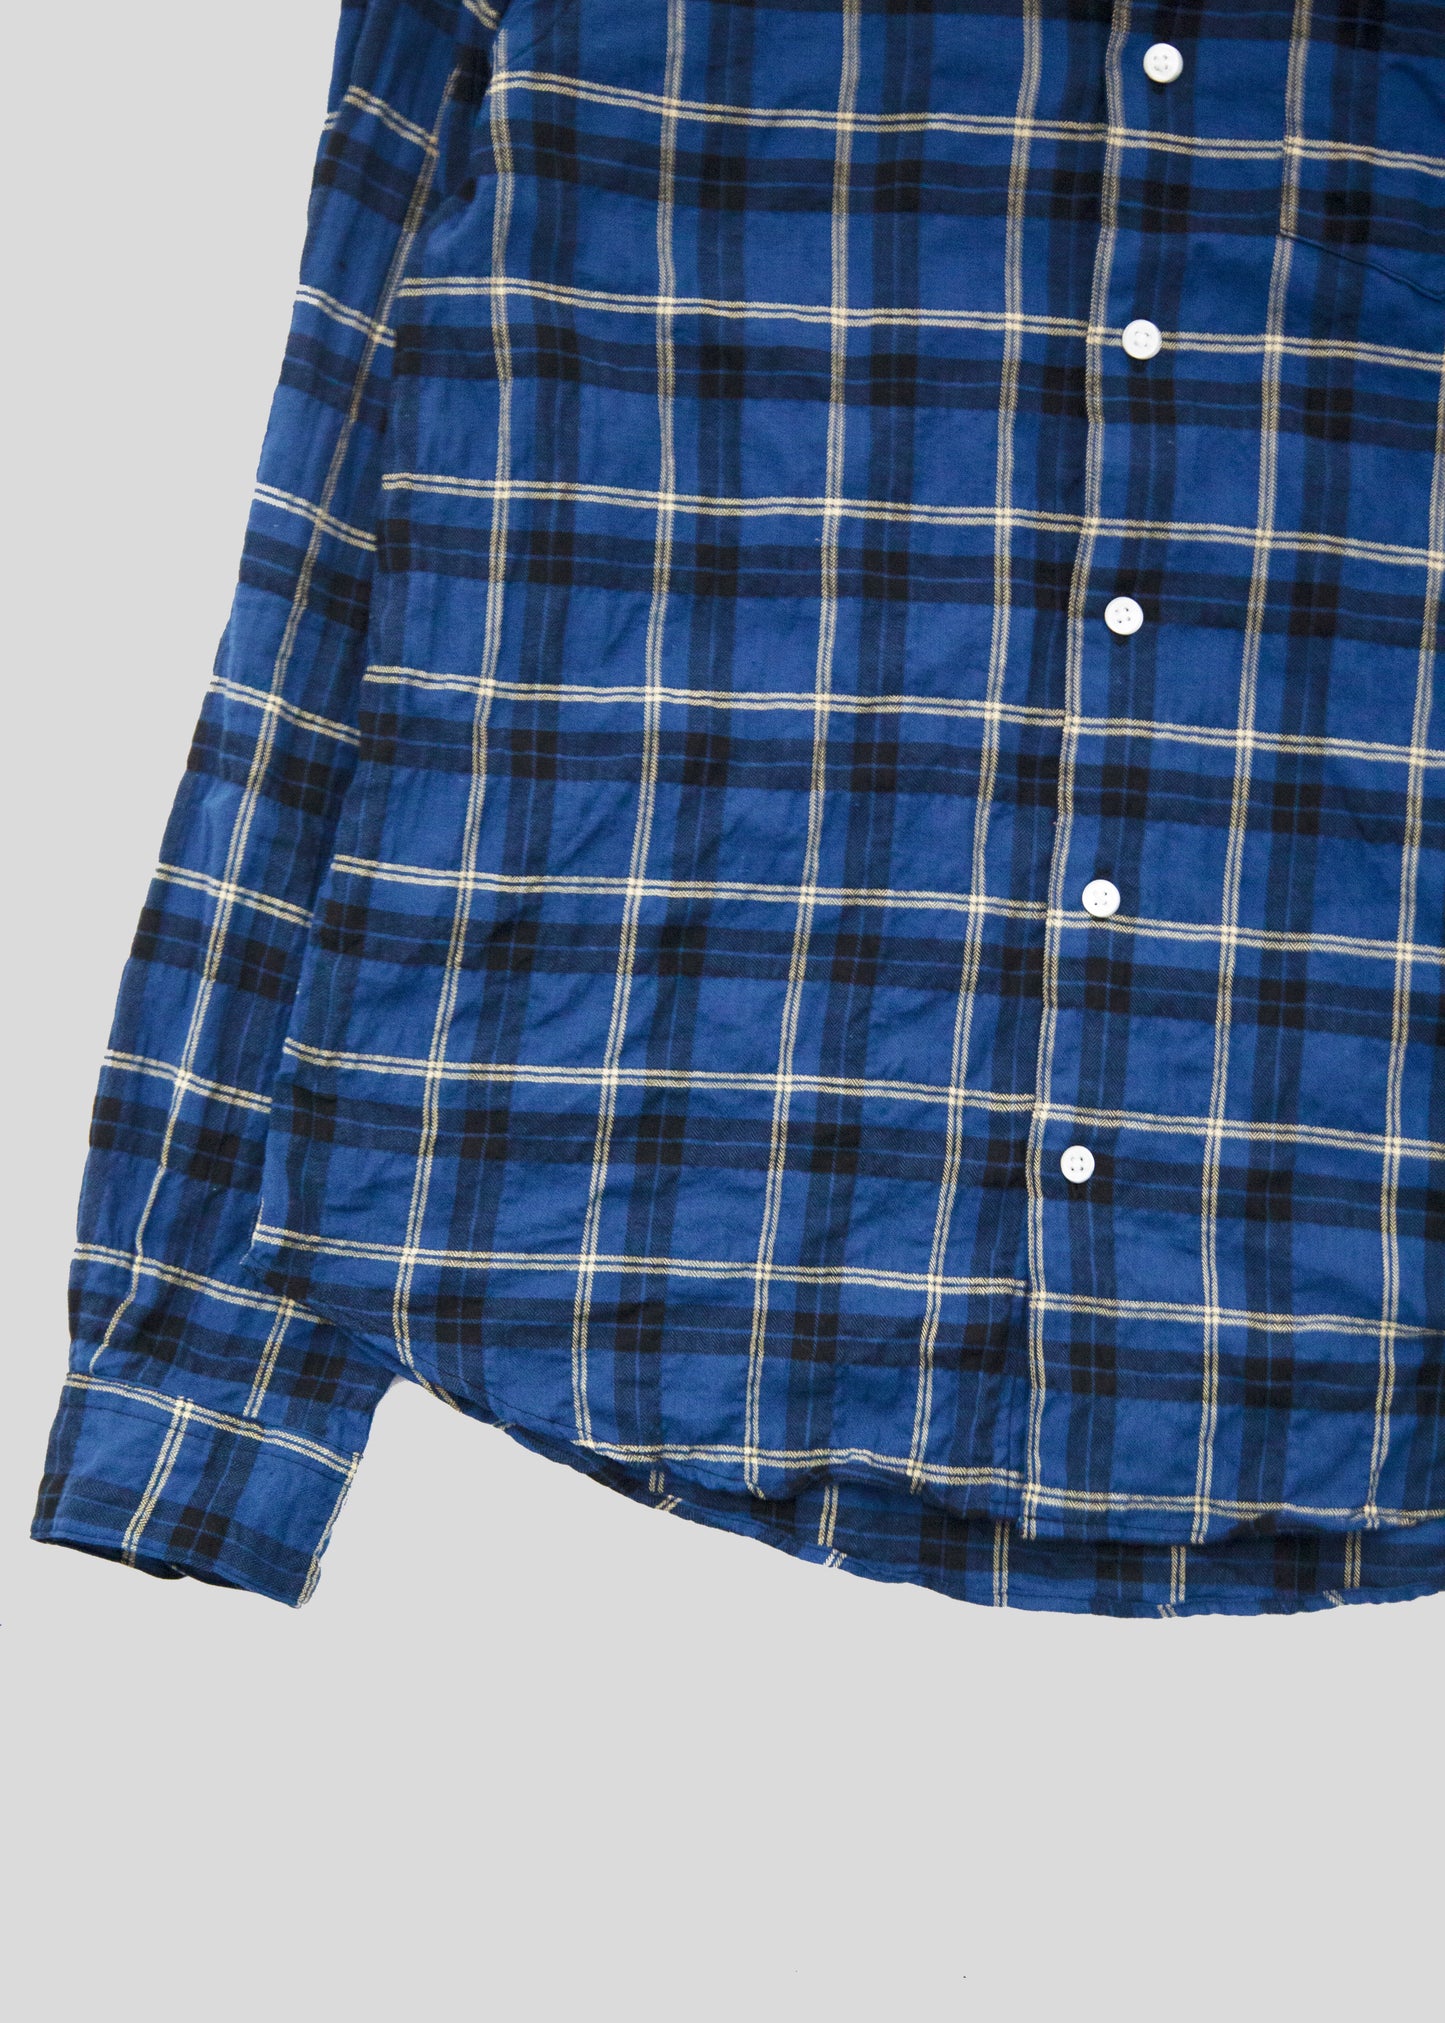 Single Needle Shirt, Blue Pucker Flannel